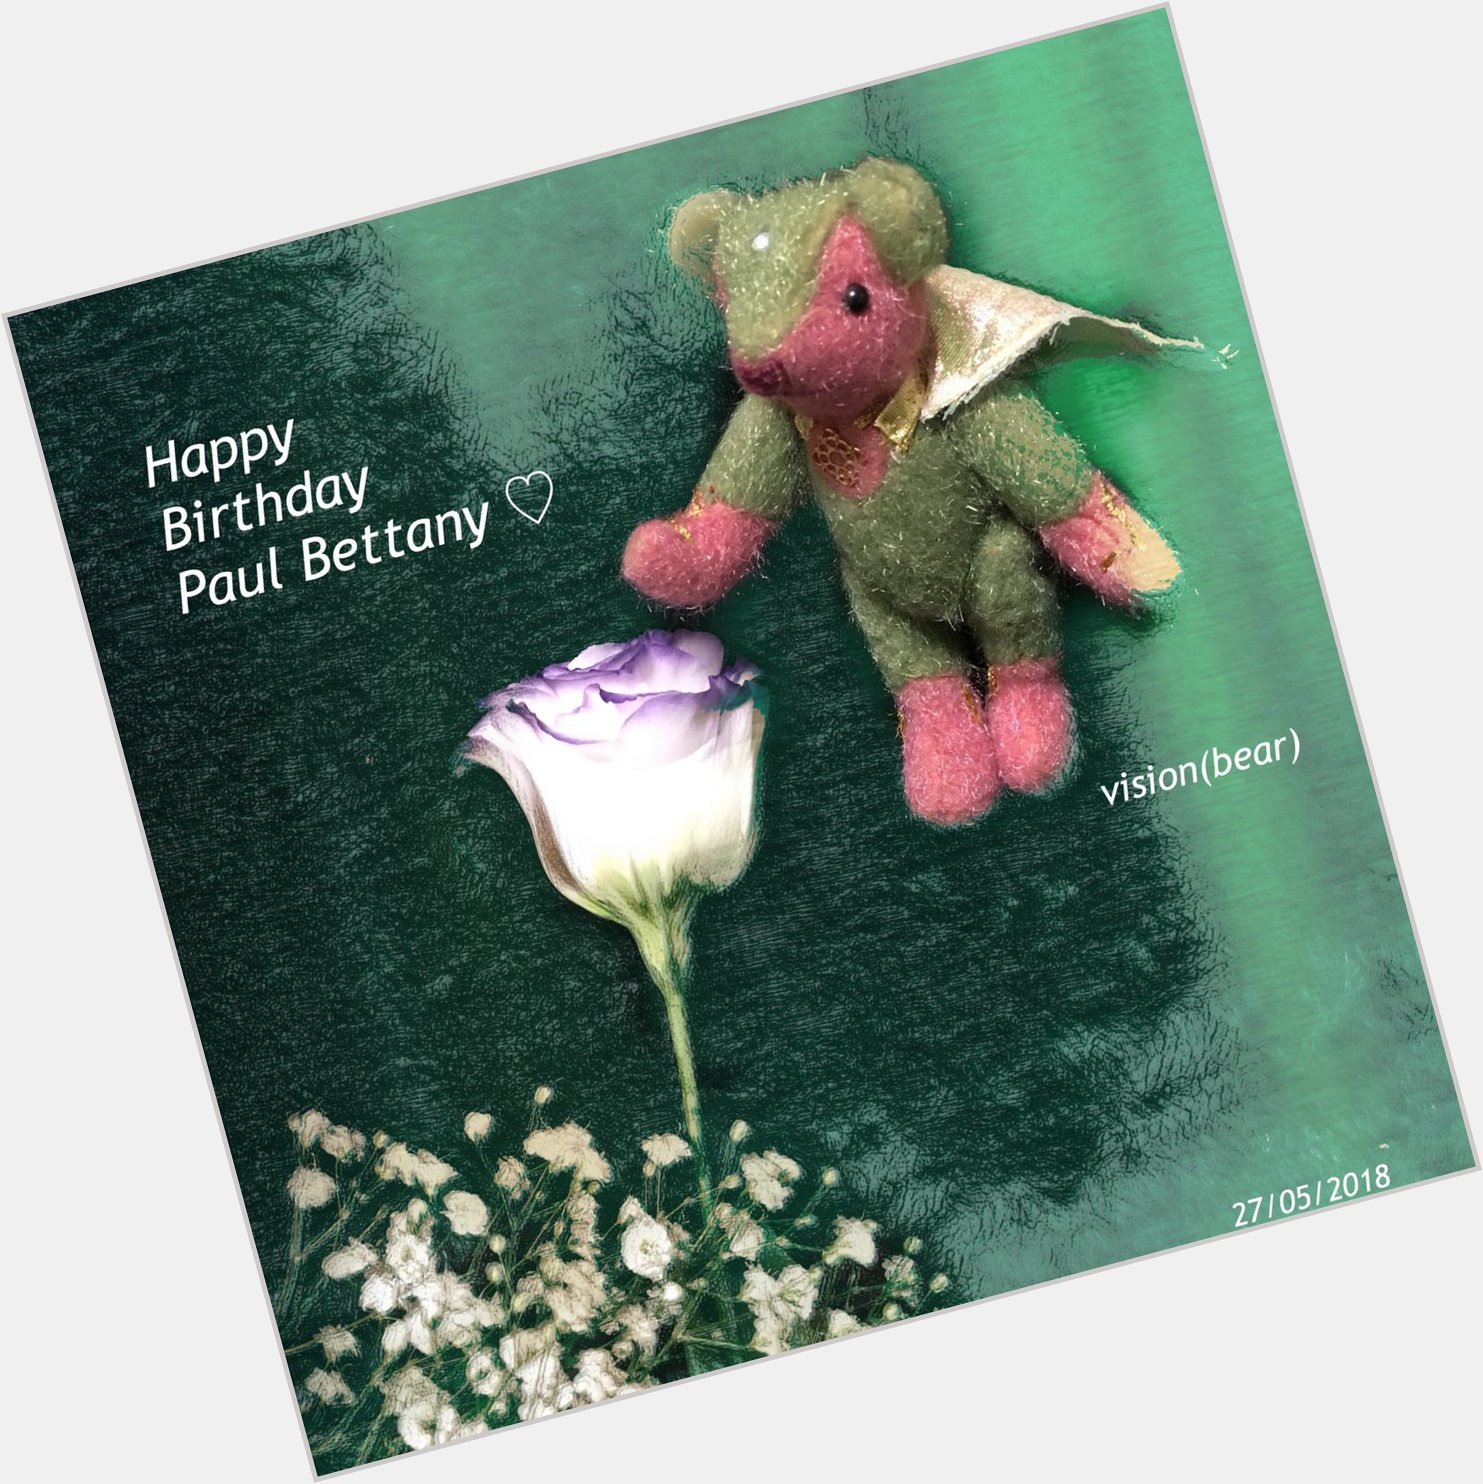 Happy Birthday Paul Bettany.                                                          